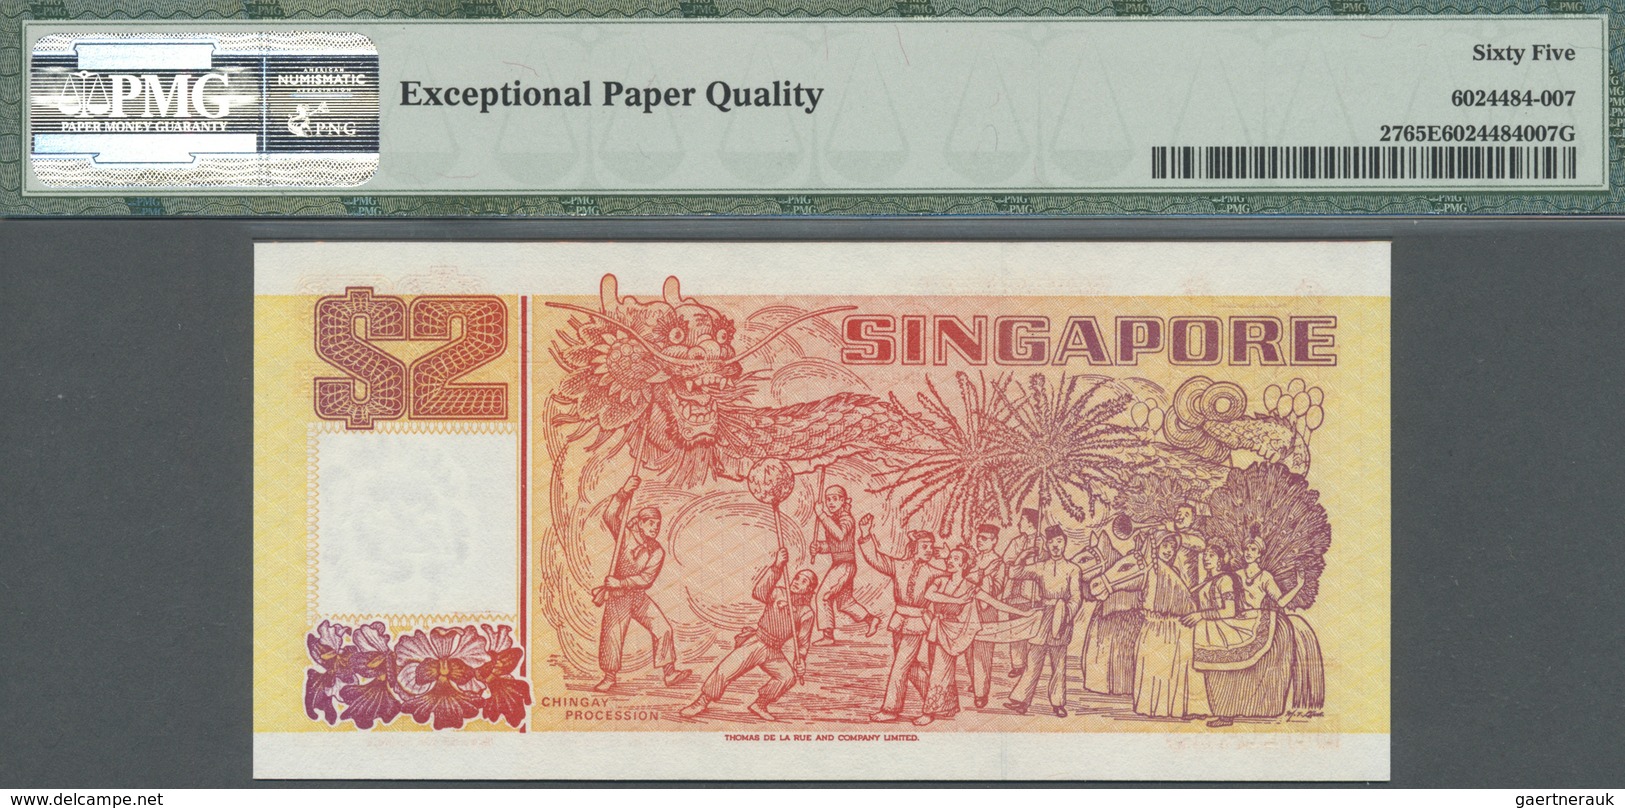 Singapore / Singapur: Interesting Set Of 3 Notes 2 Dollars ND(1990) P. 27 From The Same Series "EC" - Singapore